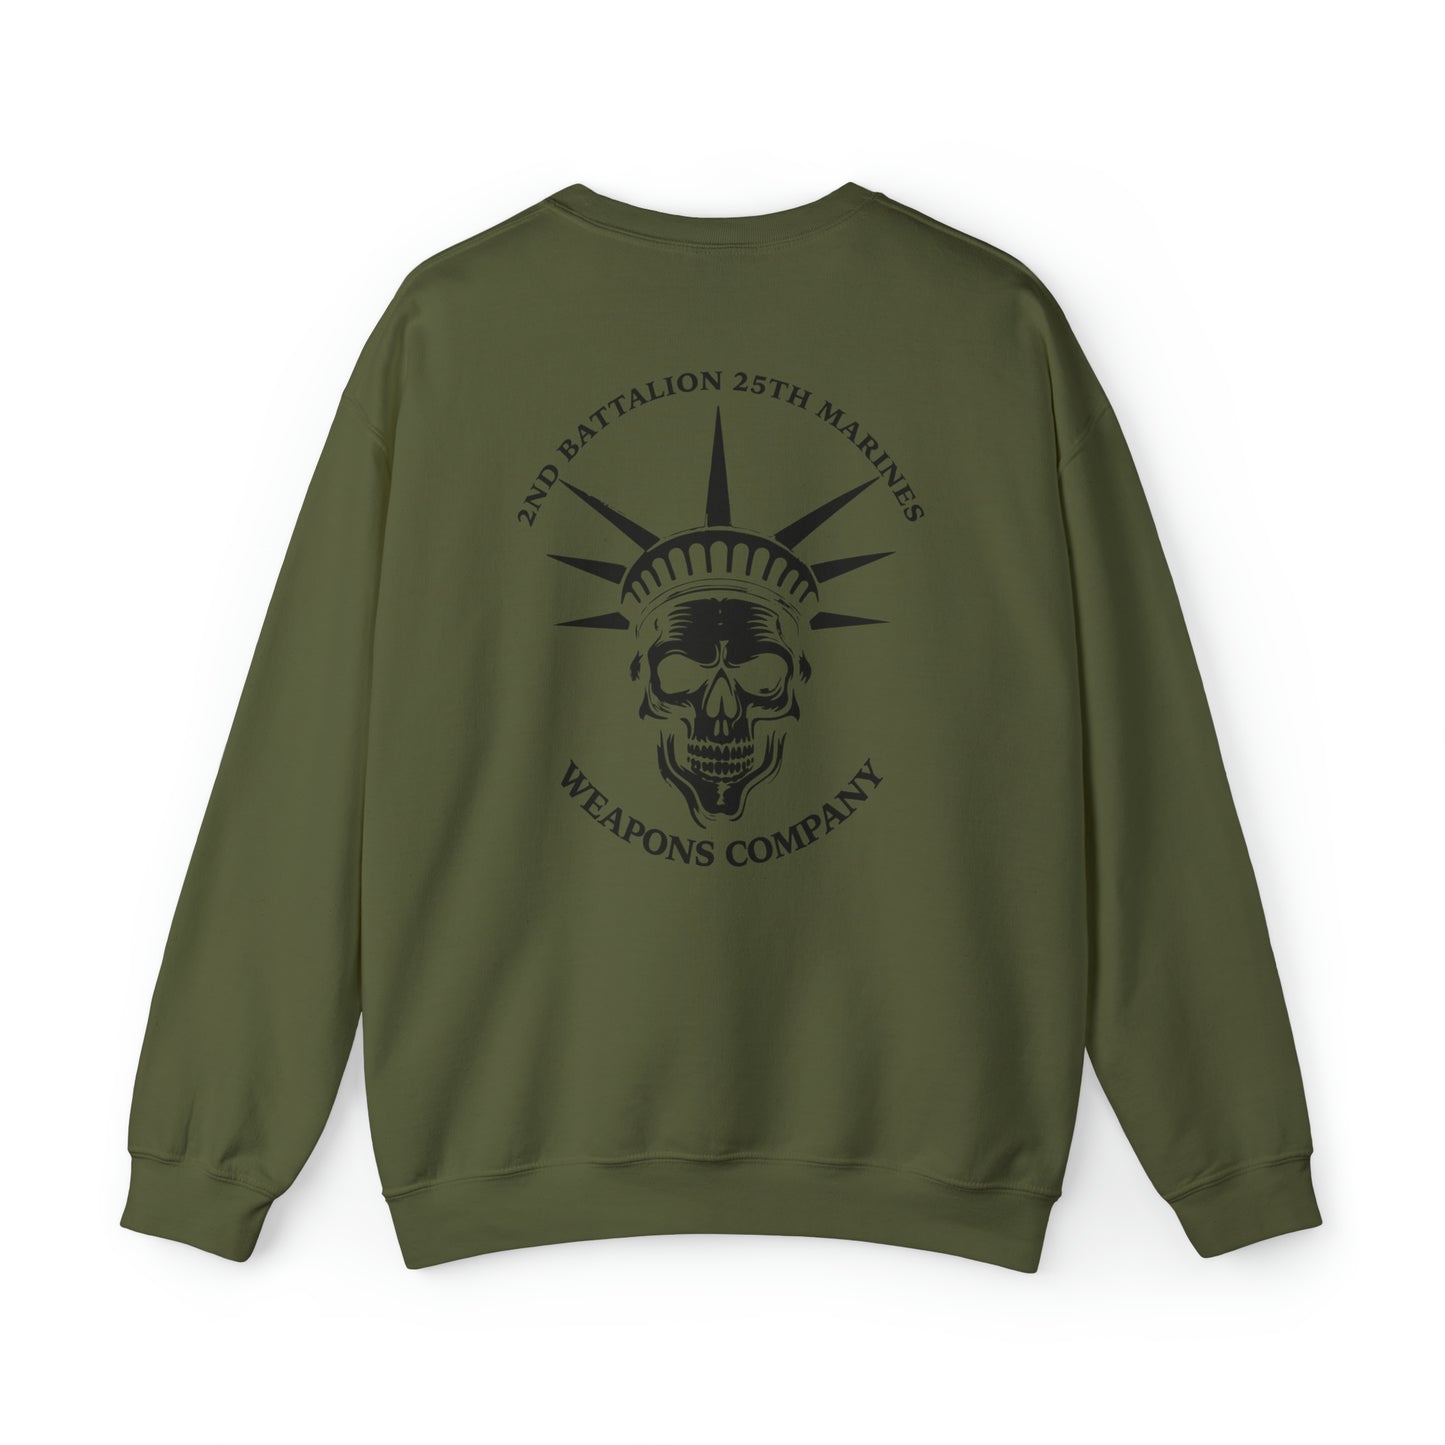 2/25 Weapons Company Sweatshirt